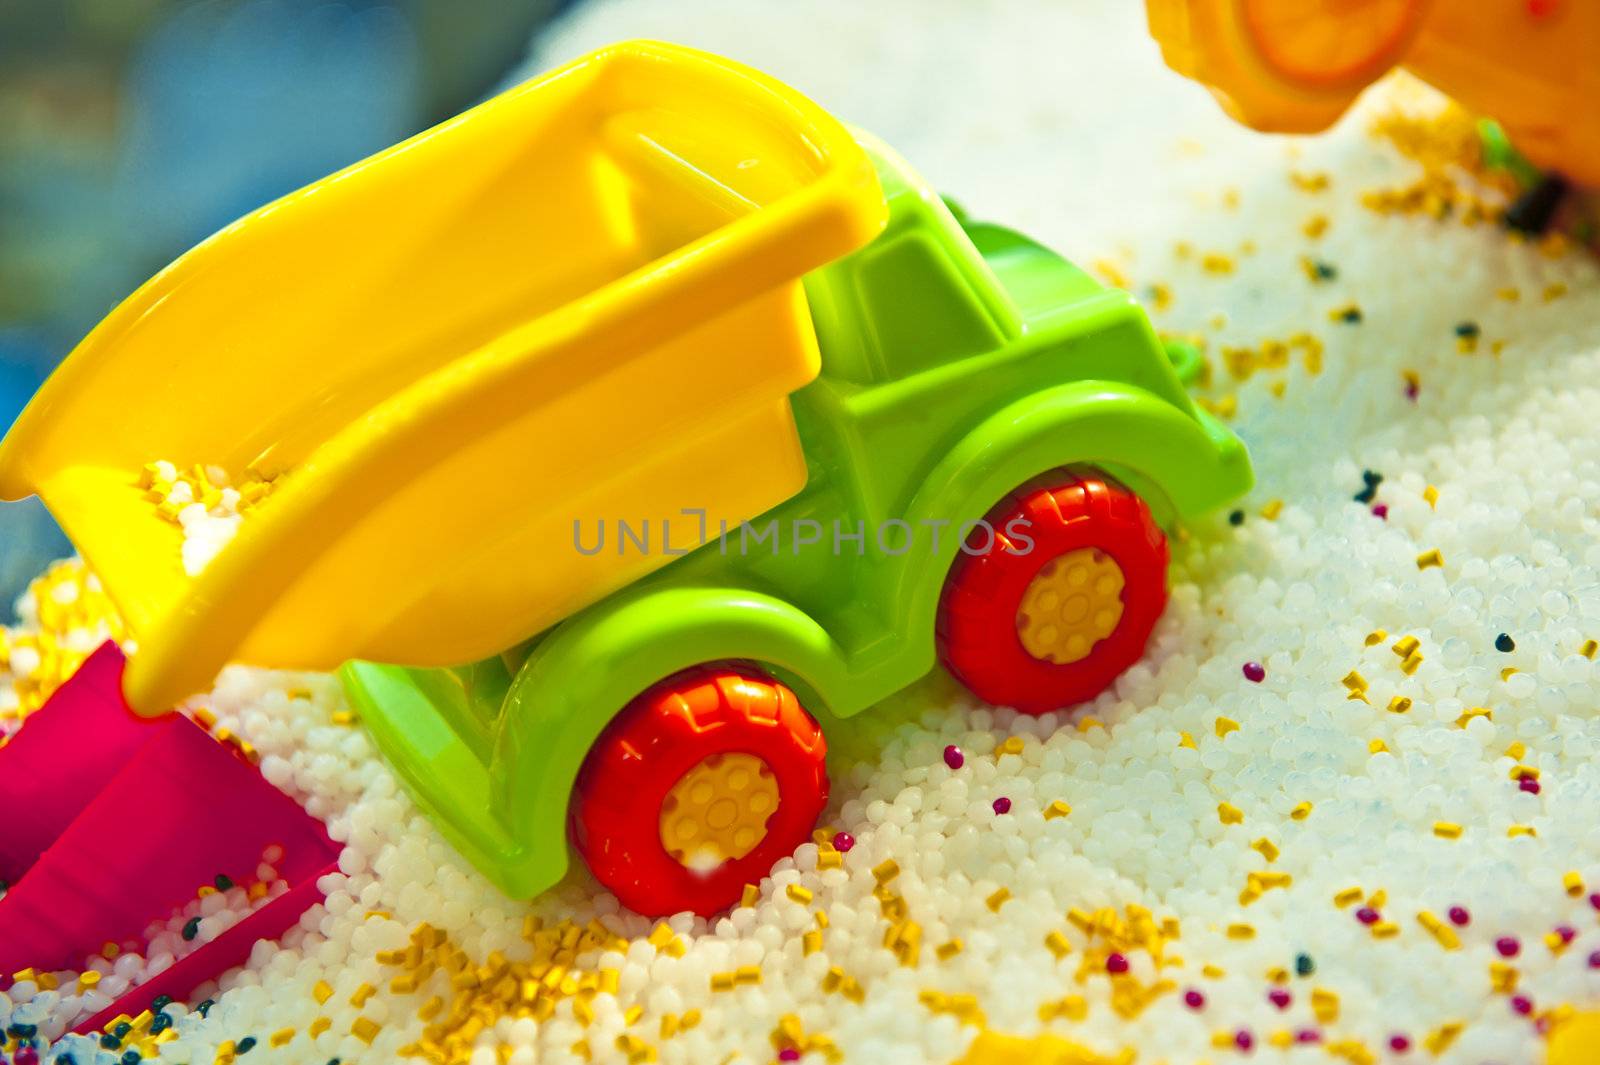 Colour toy car by Alenmax